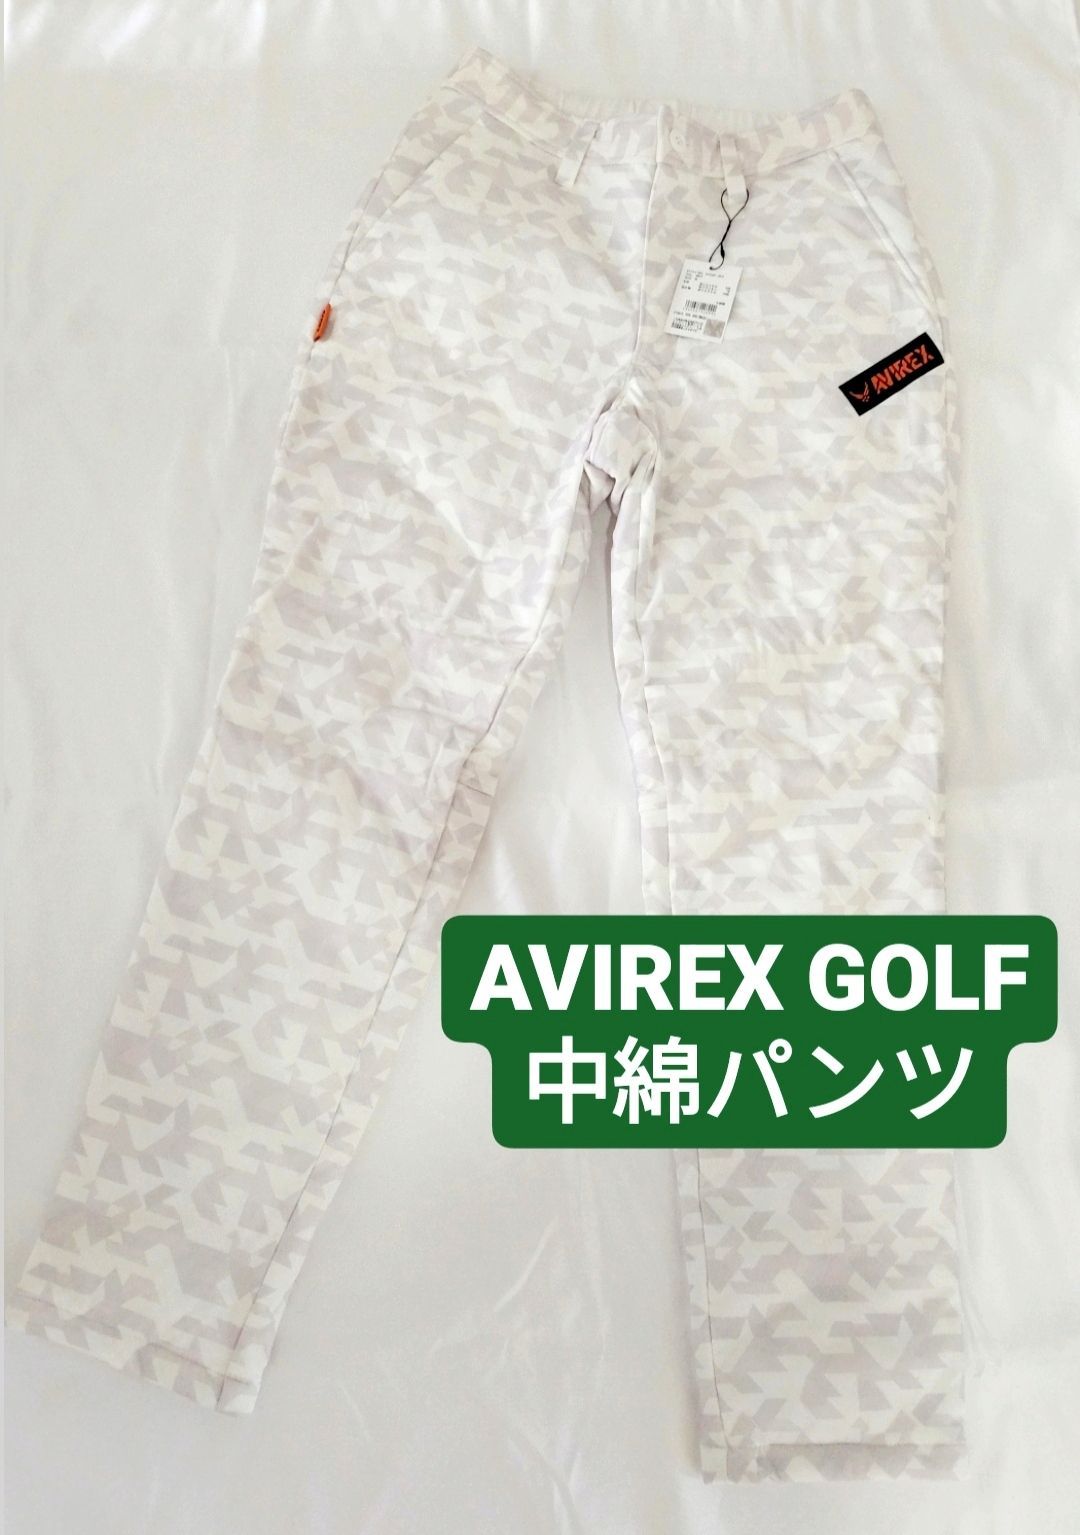 AVIREX GOLF 中綿パンツ - Golf ShopBOUNCE BACK - メルカリ